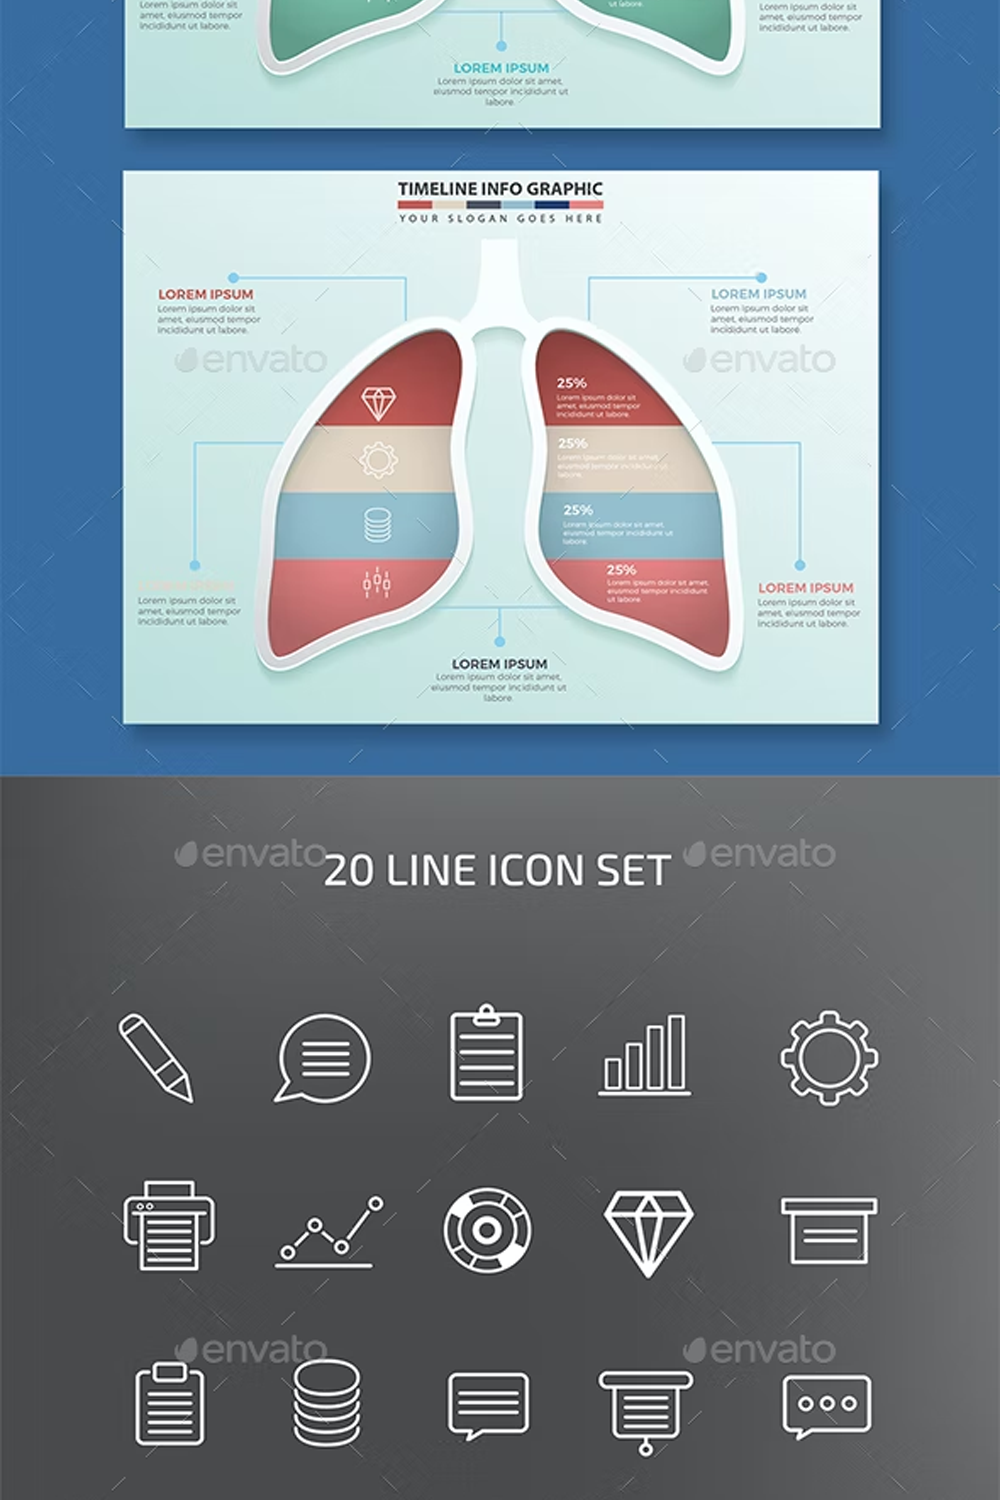 Illustrations lung infographics design of pinterest.